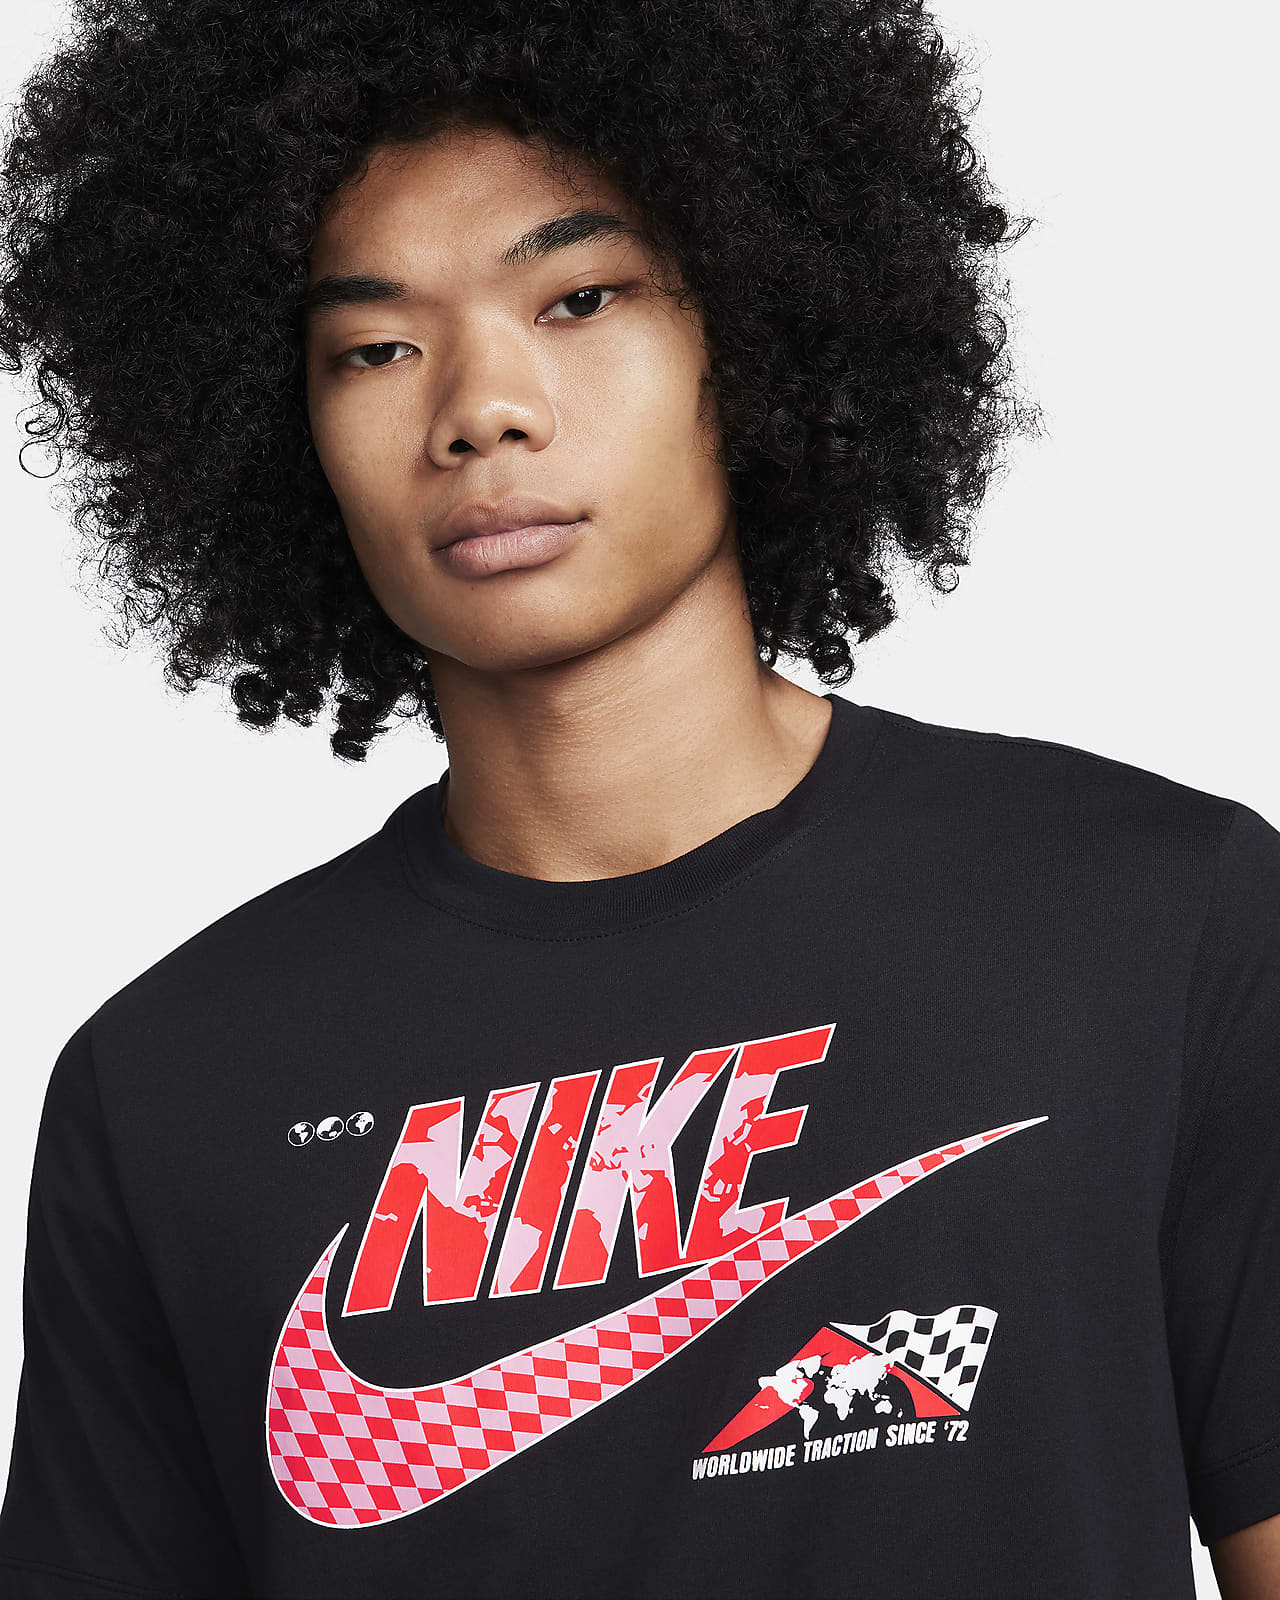 T Shirt Nike pour Homme